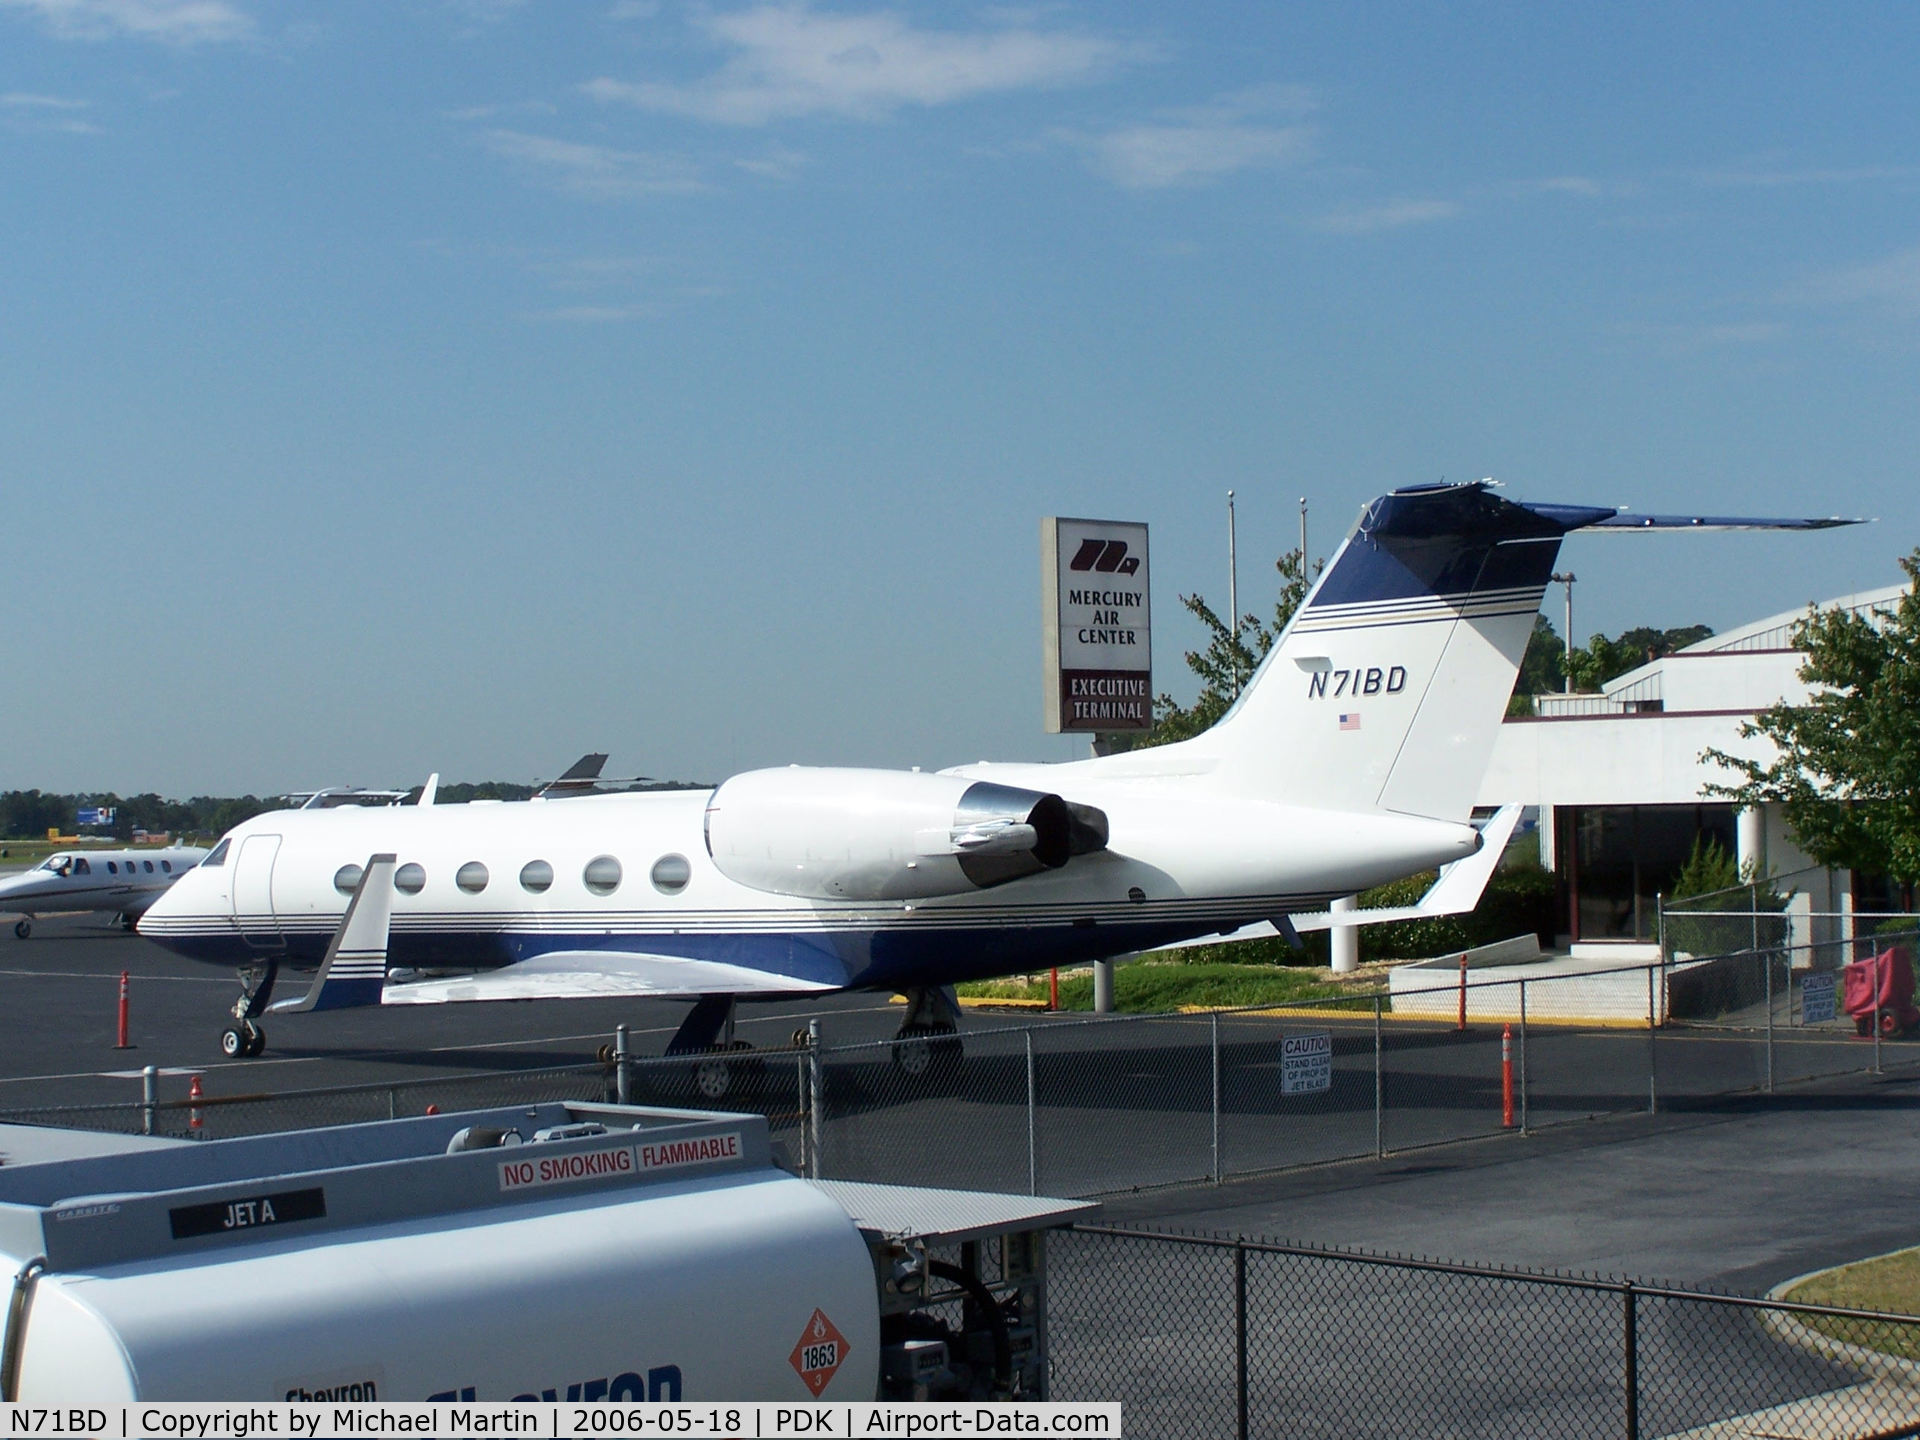 N71BD, 2000 Gulfstream Aerospace G-IV-SP C/N 1415, Tied Down @ Mercury Air Center with other A/C